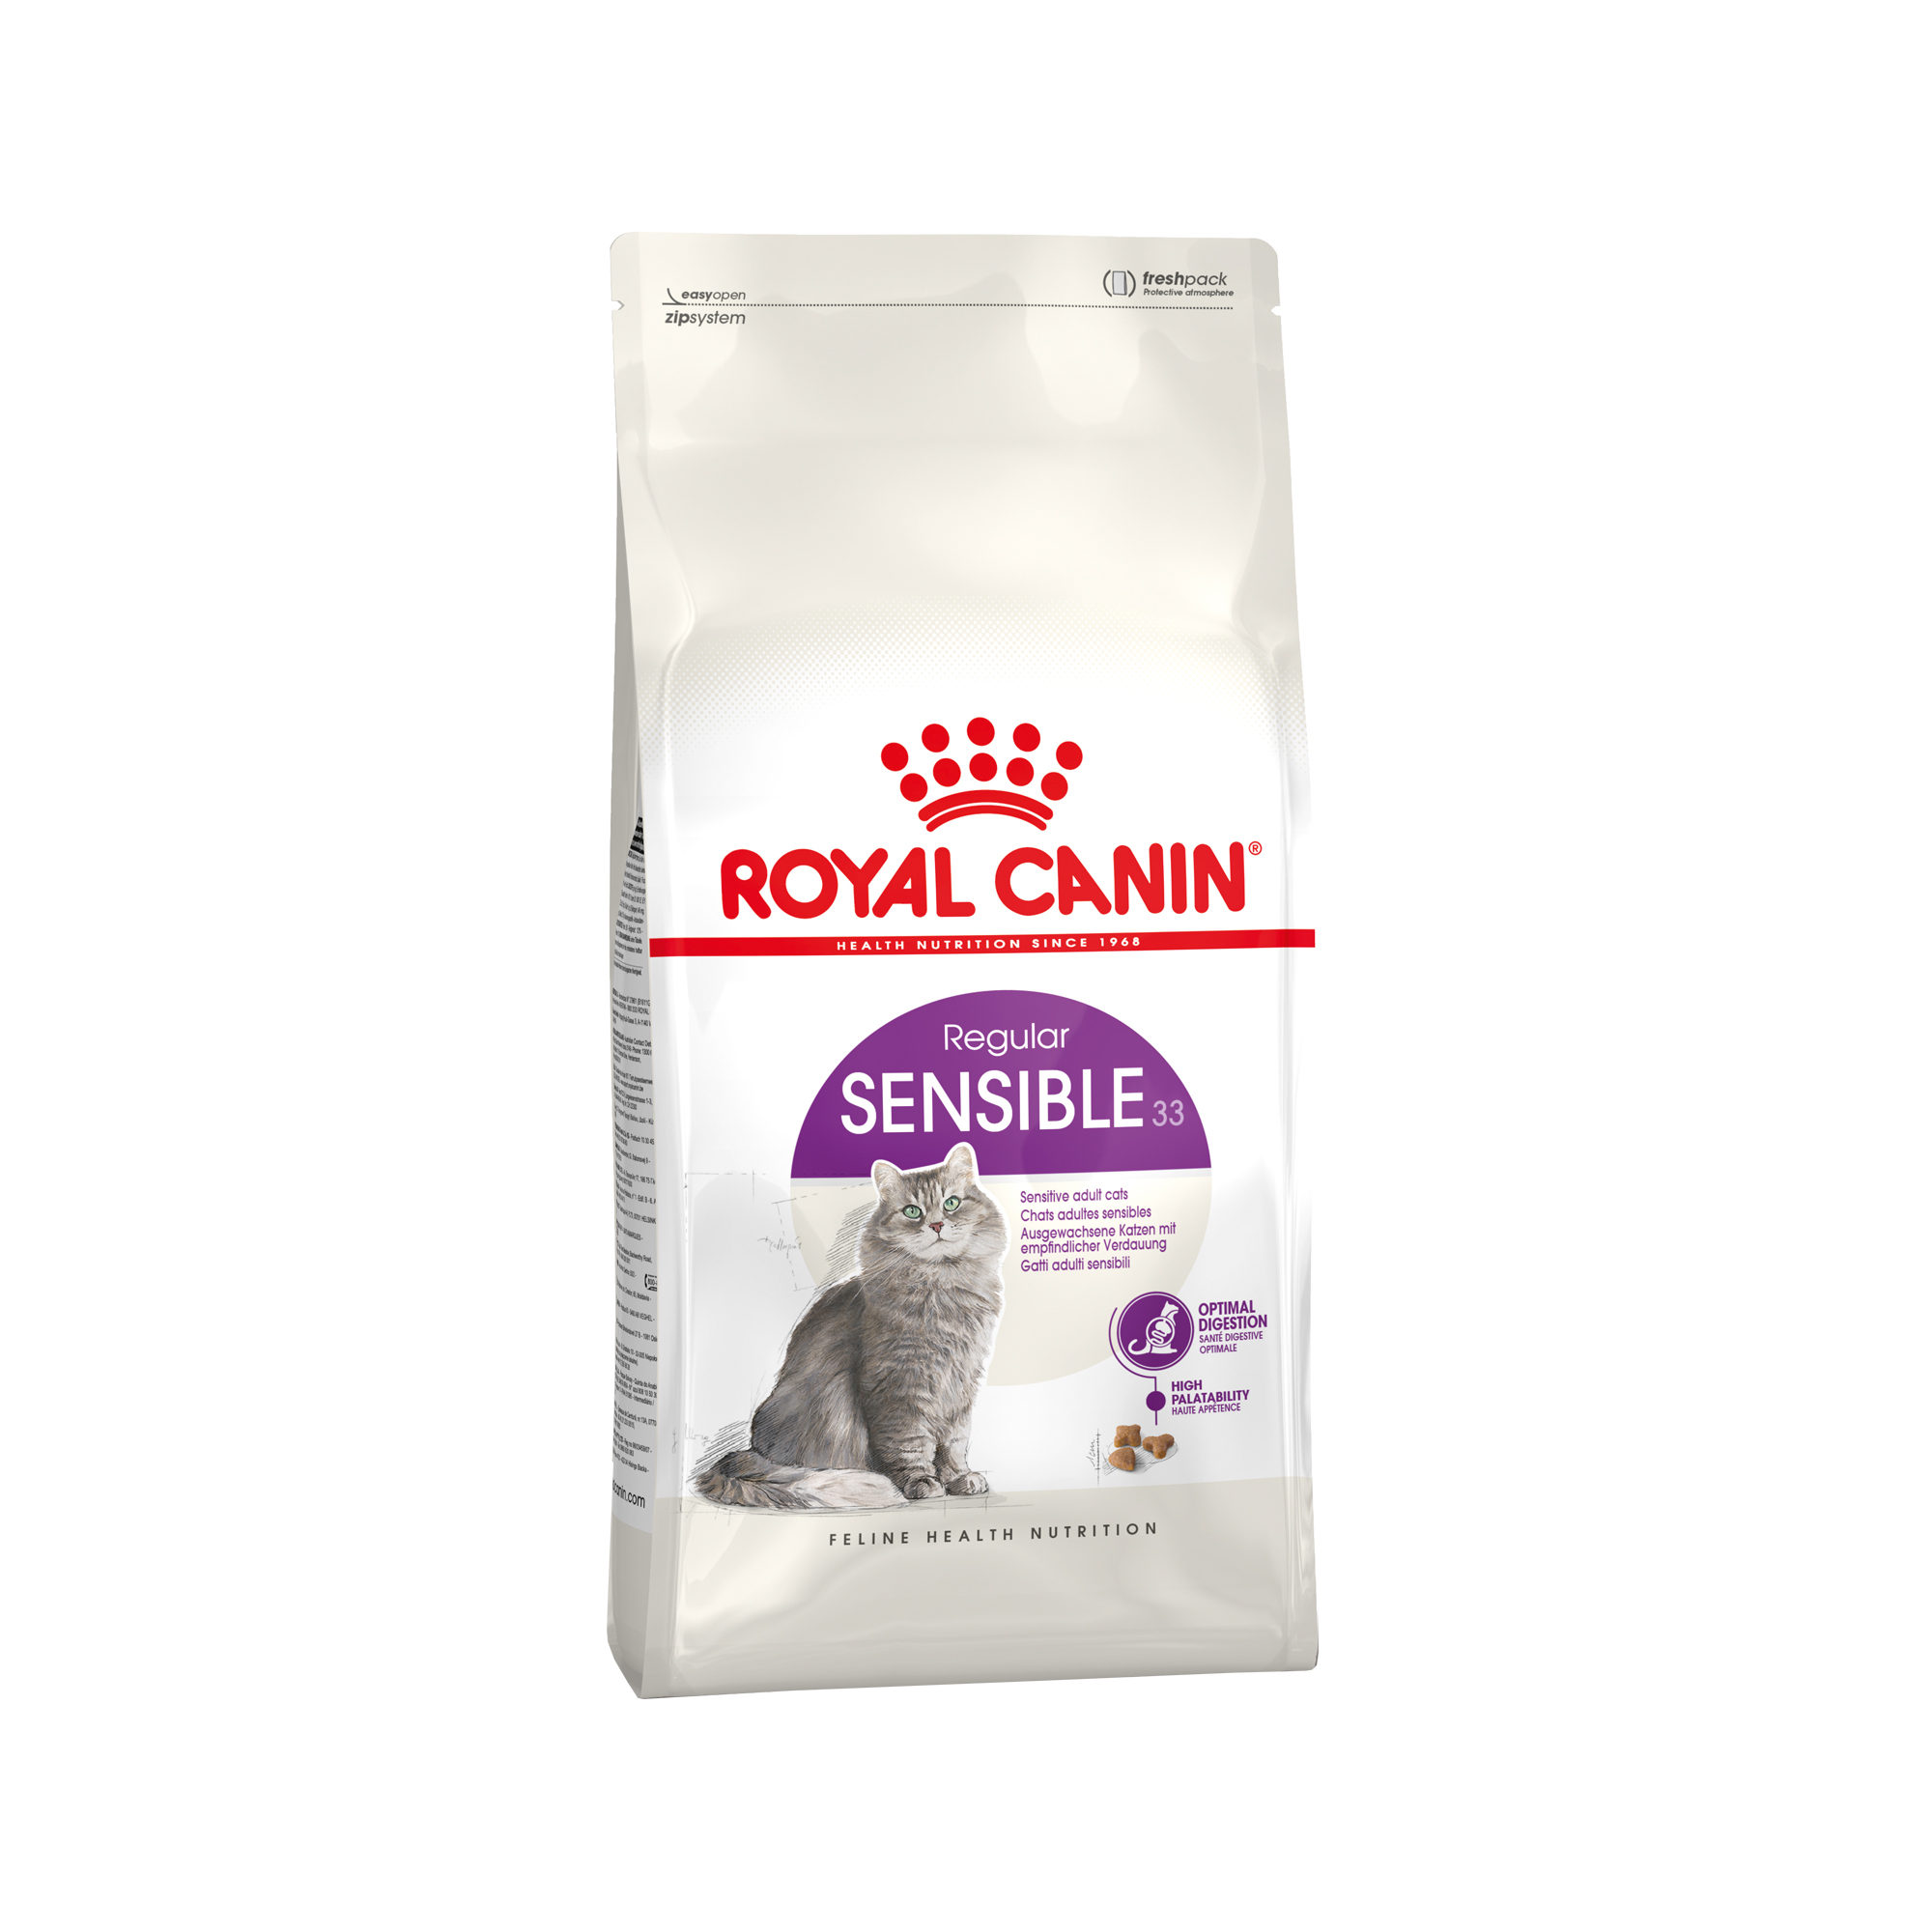 Royal Canin Sensible 33 Katzenfutter - 4 kg